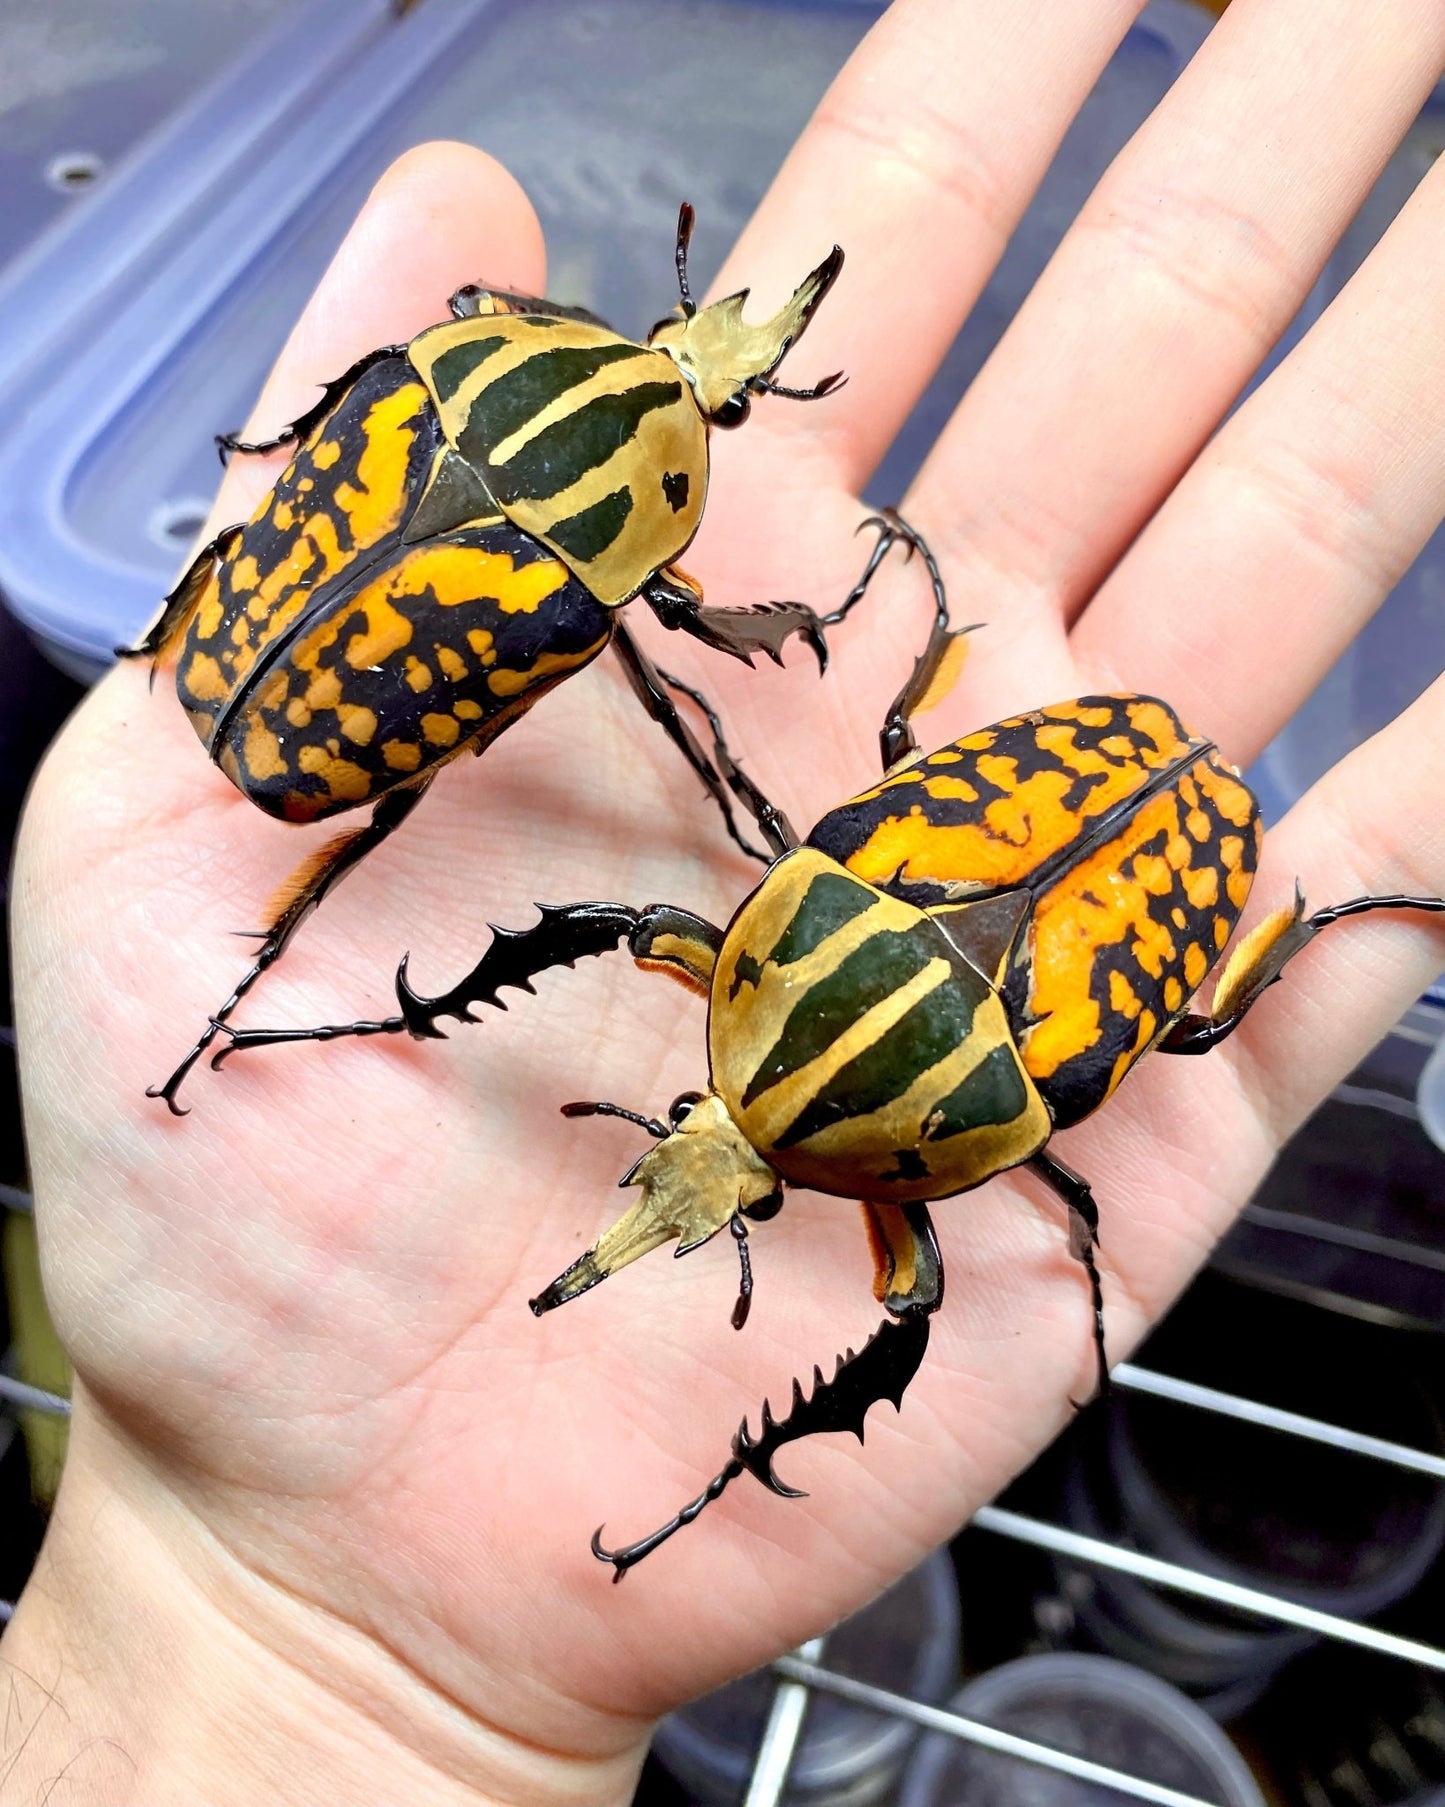 Larvae - "Orange" Tiger Flower Beetle, (Mecynorrhina oberthuri) - Richard’s Inverts